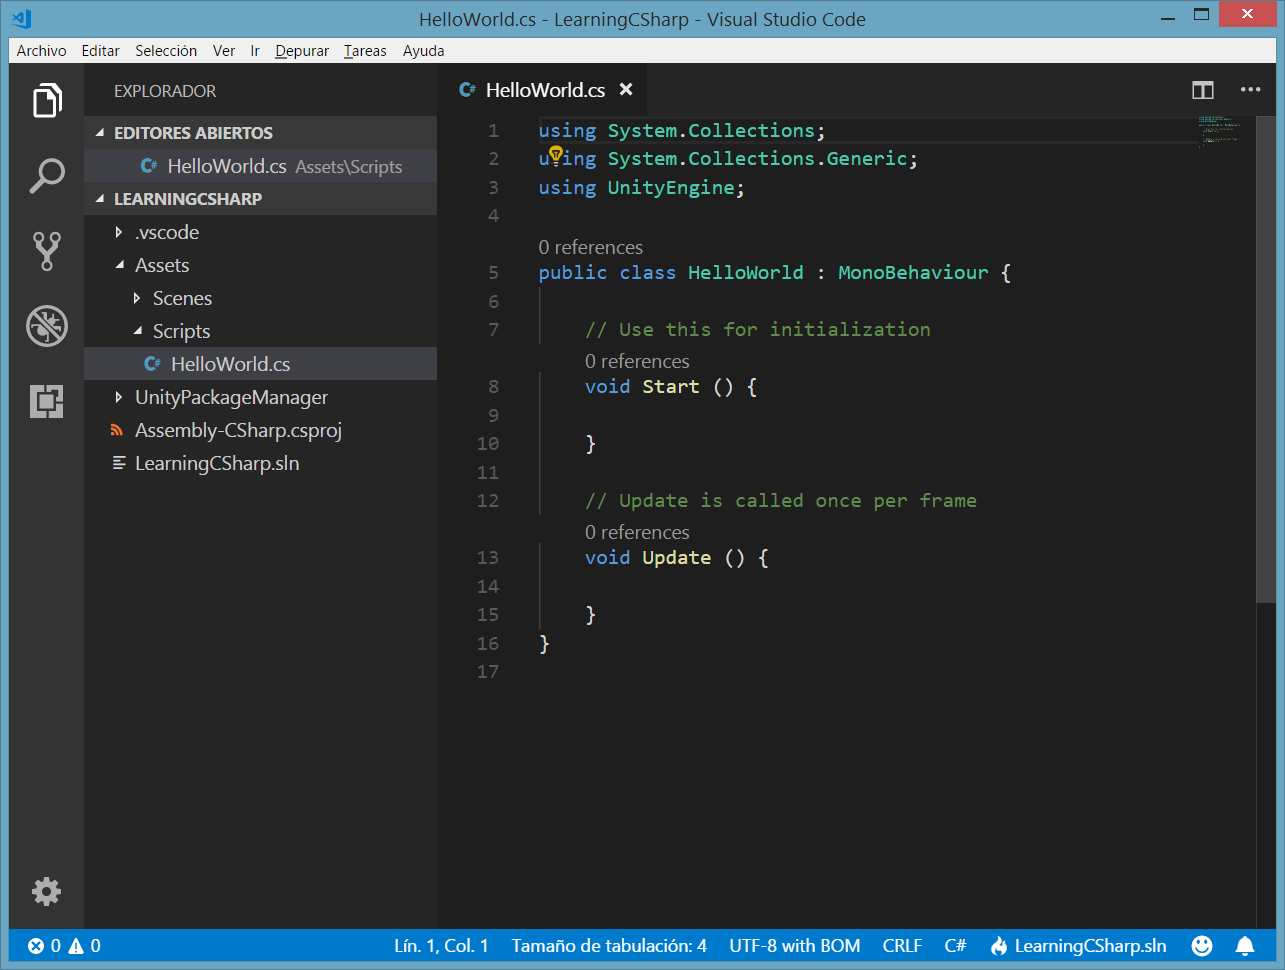 Code reply. Visual Studio код c#. Visual Studio code Интерфейс. Программный код Visual Studio. Среда разработки Visual Studio code.